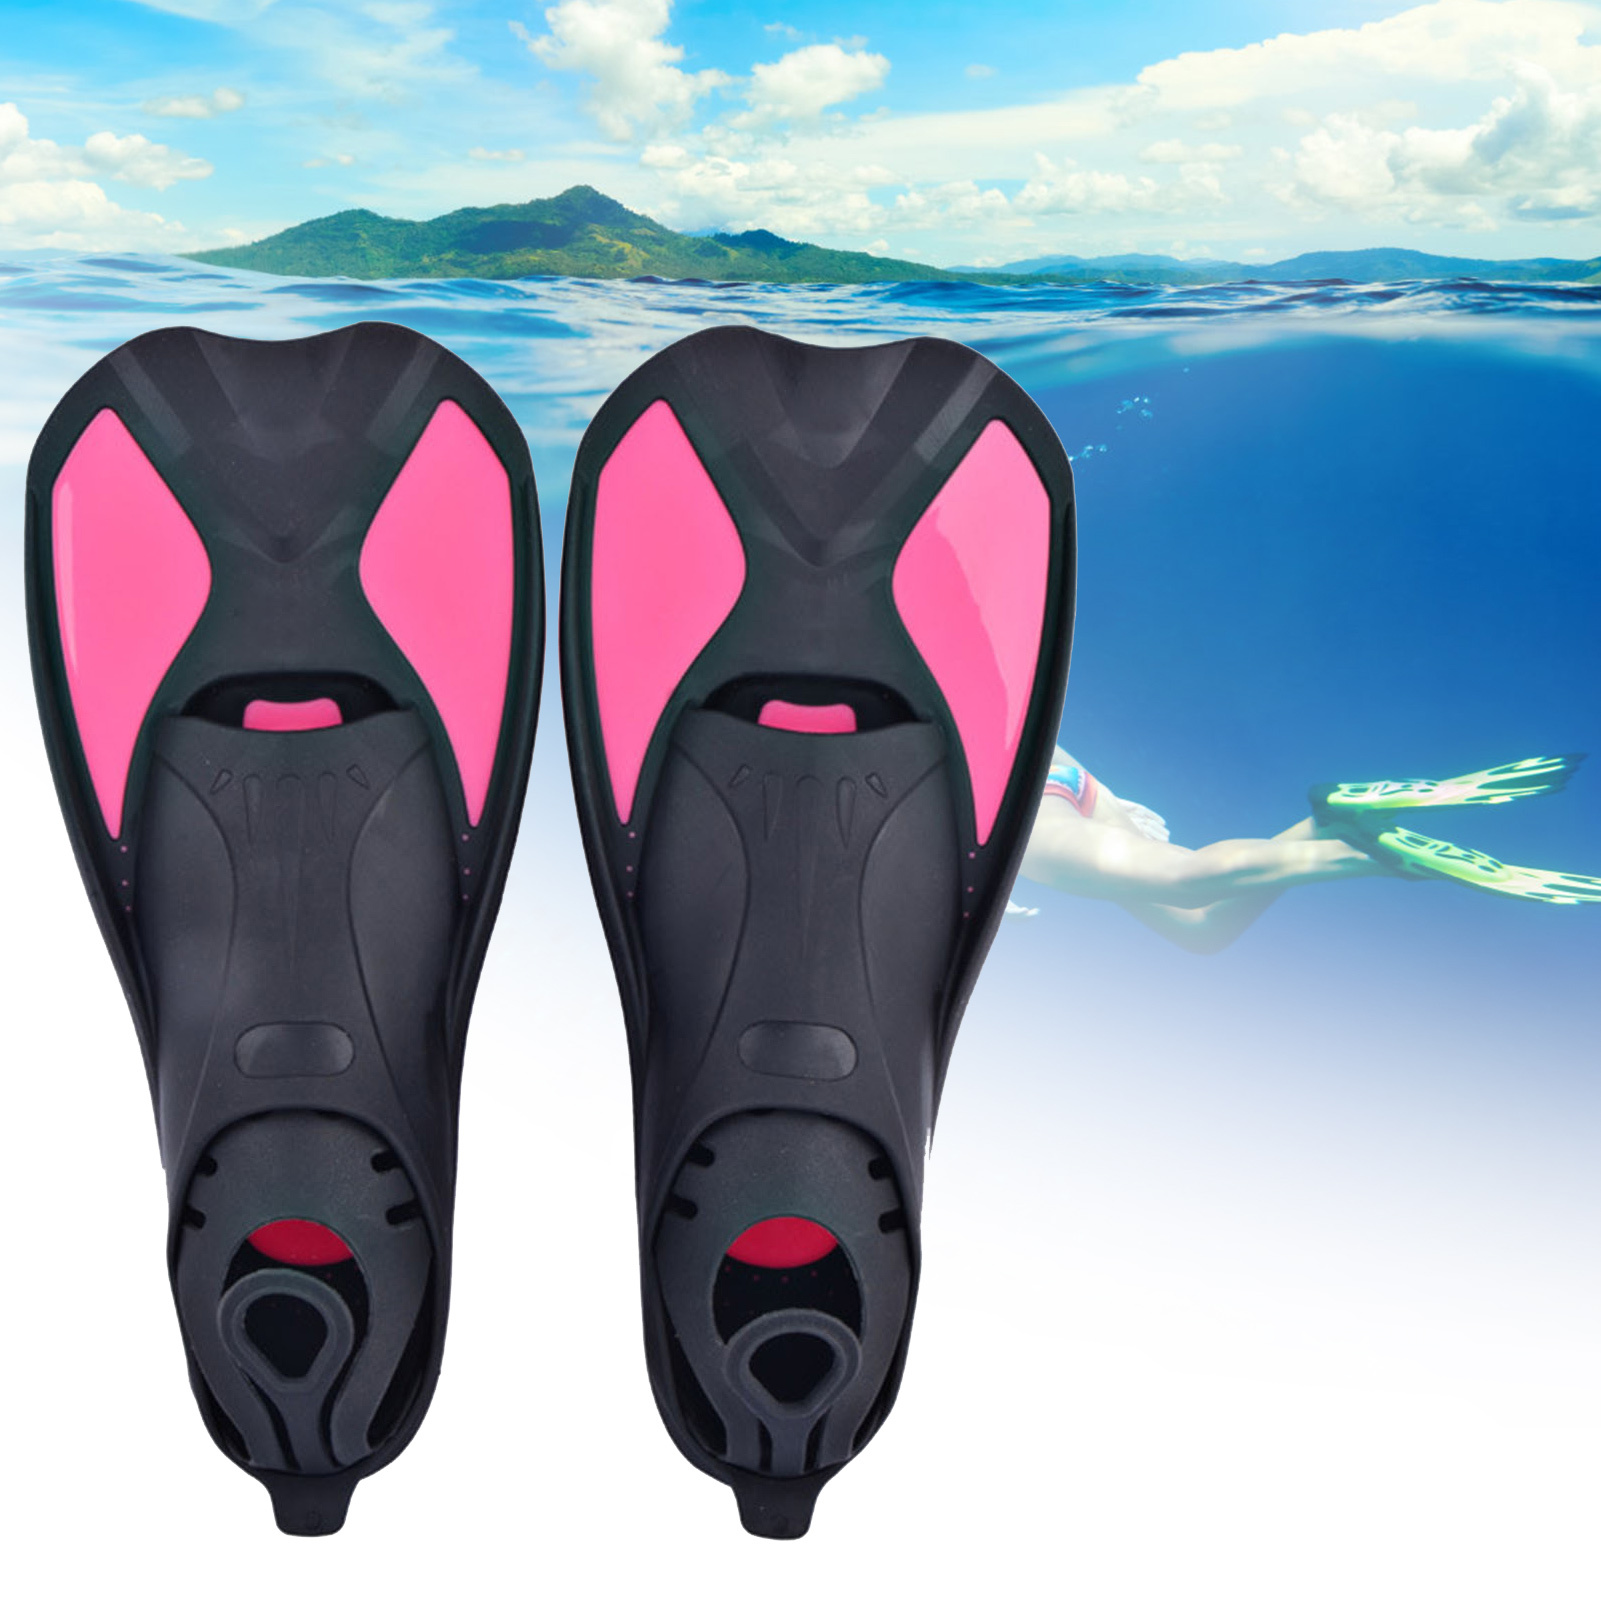 Adult Snorkeling Swim Fins Adjustable Size Comfortable Wearing Fins for